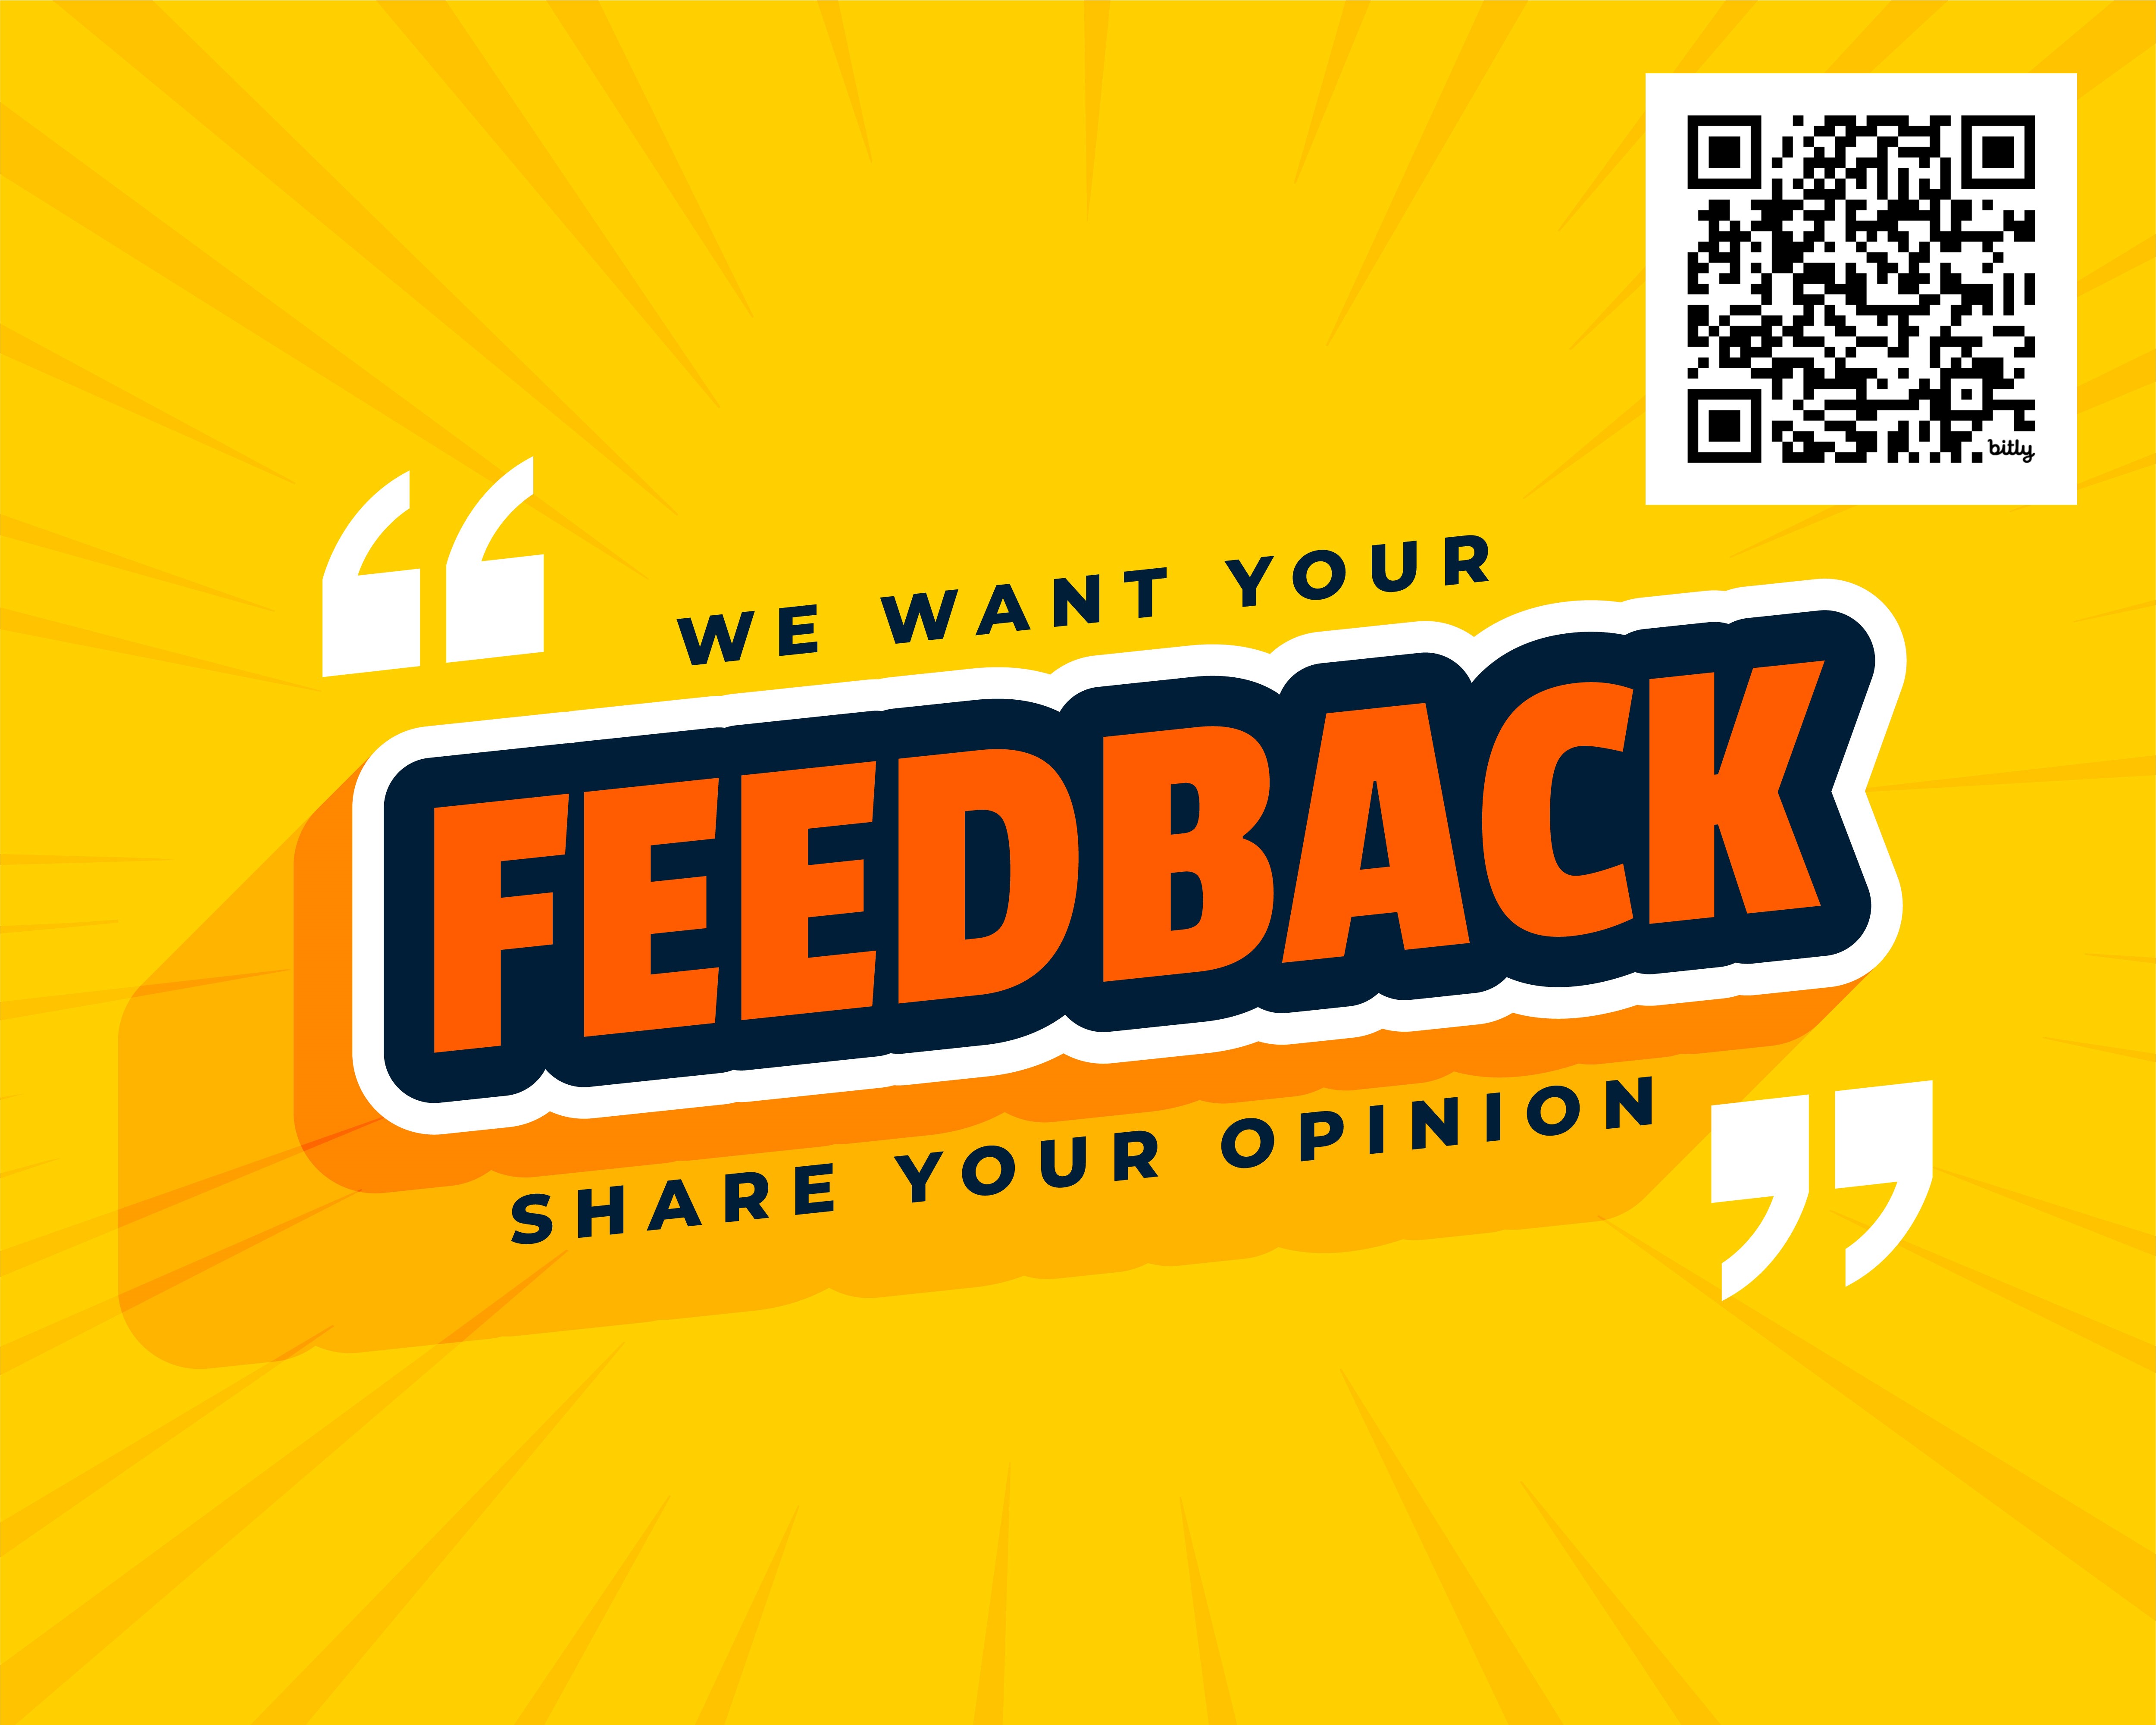 Survey feedback image